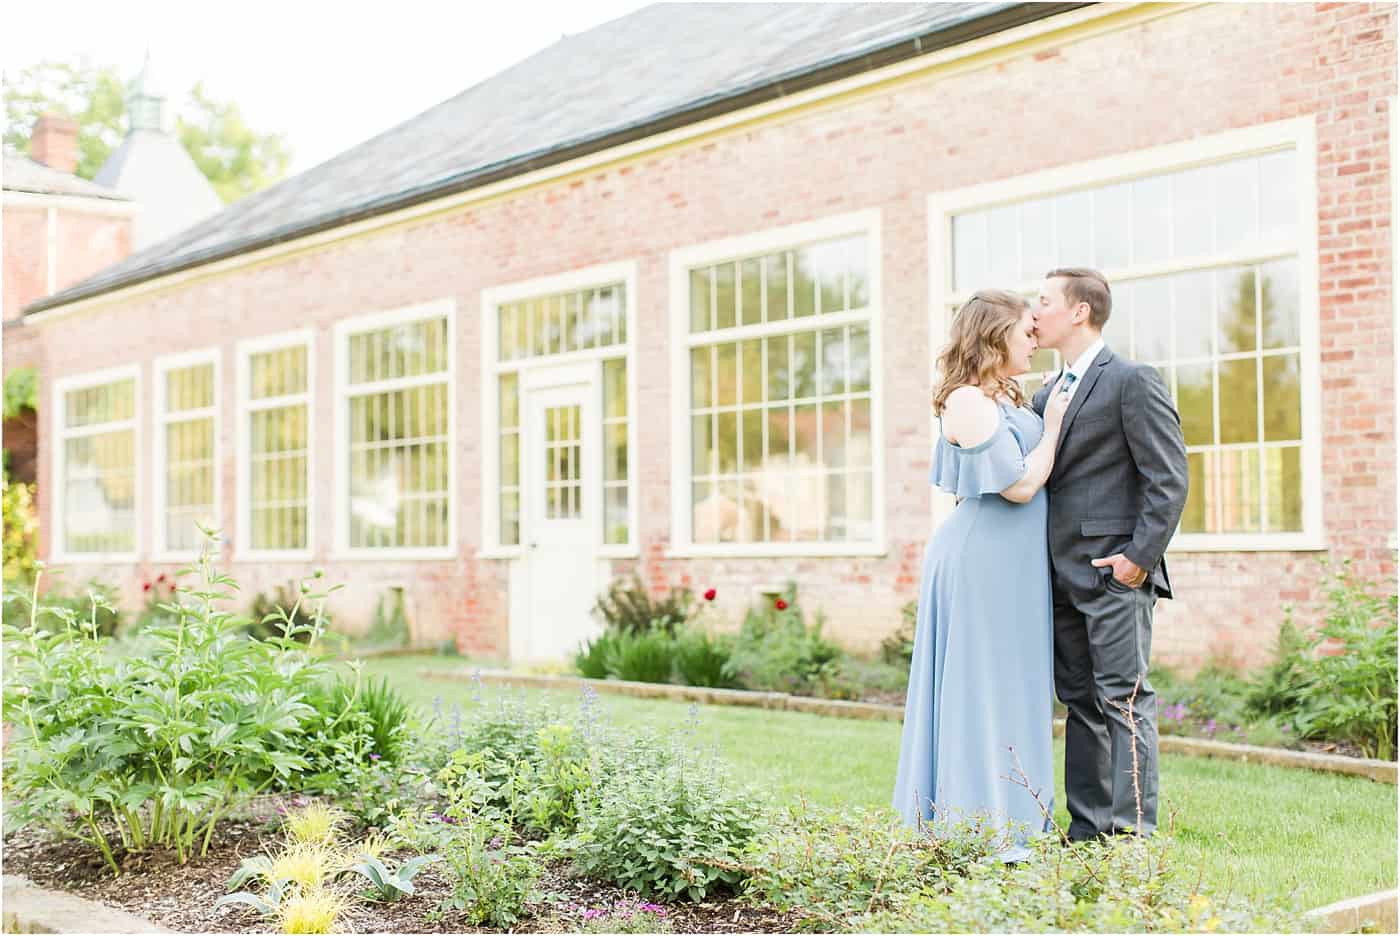 Engagement session at Kingwood Center Gardens by akron wedding photographer loren jackson photography